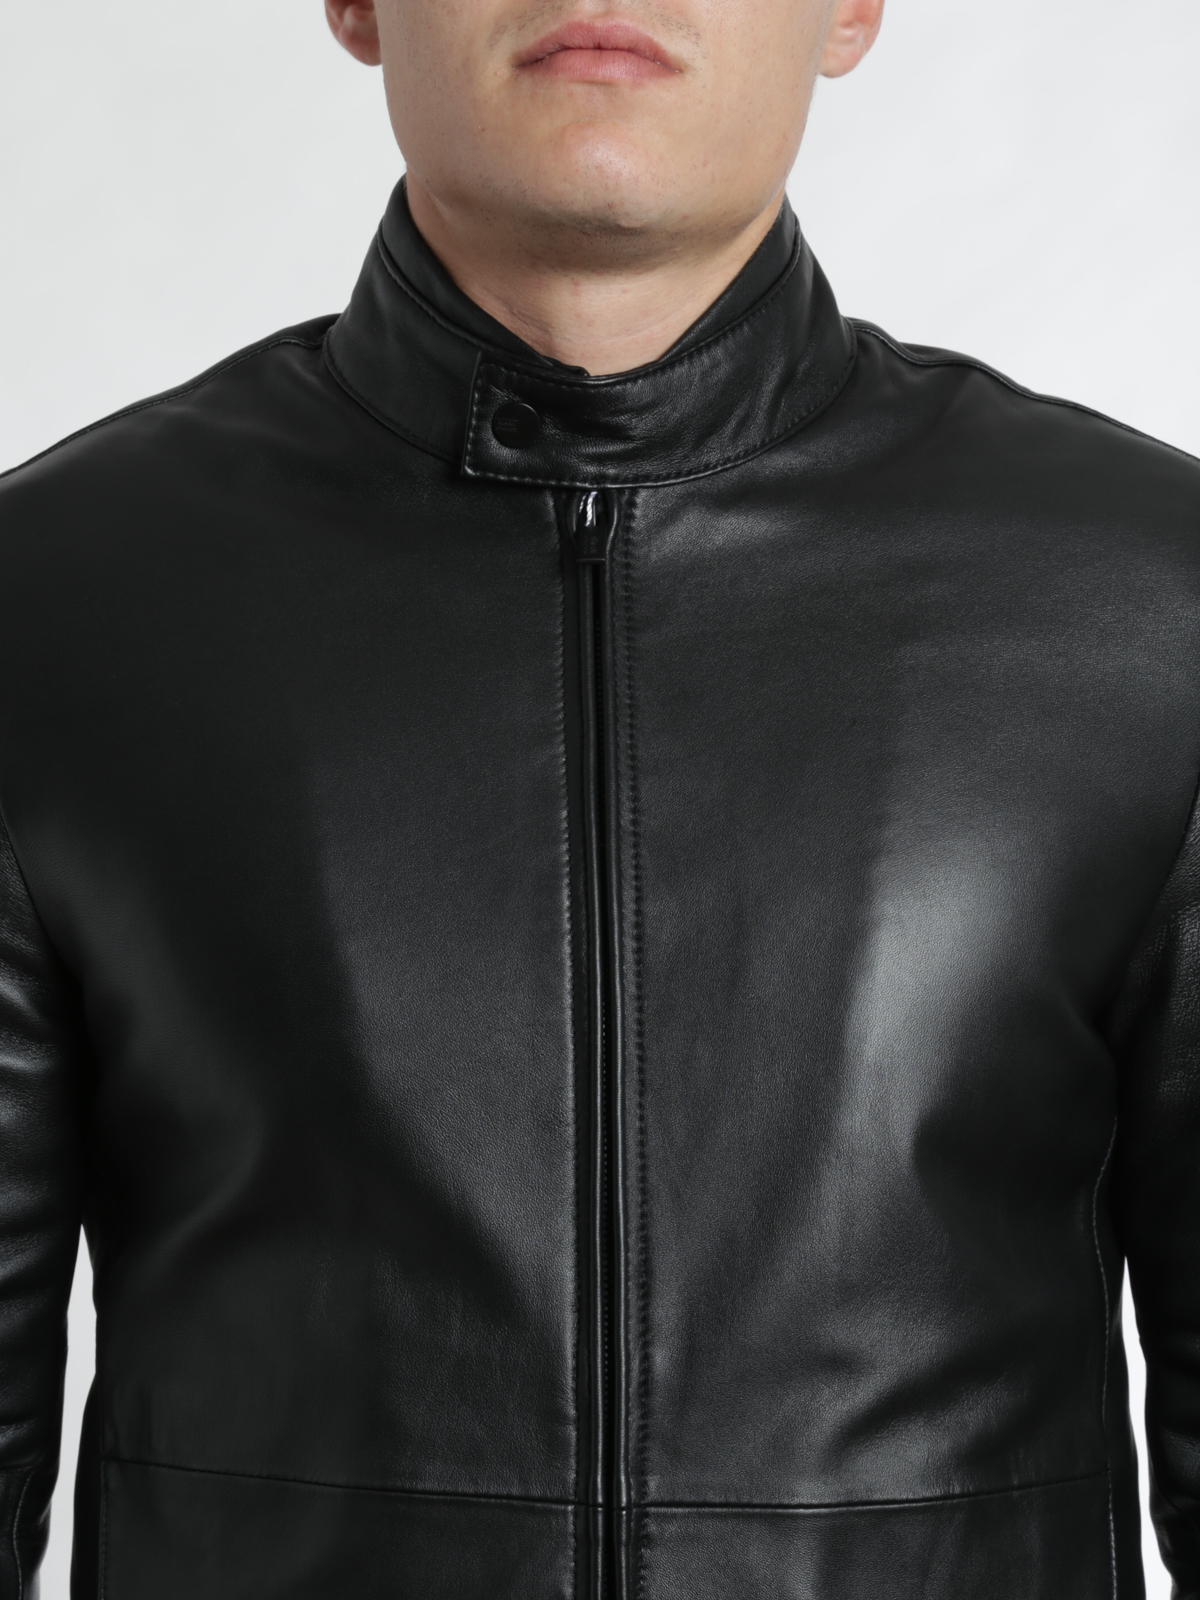 Descubrir 76+ imagen armani collezioni italia leather jacket - Viaterra.mx